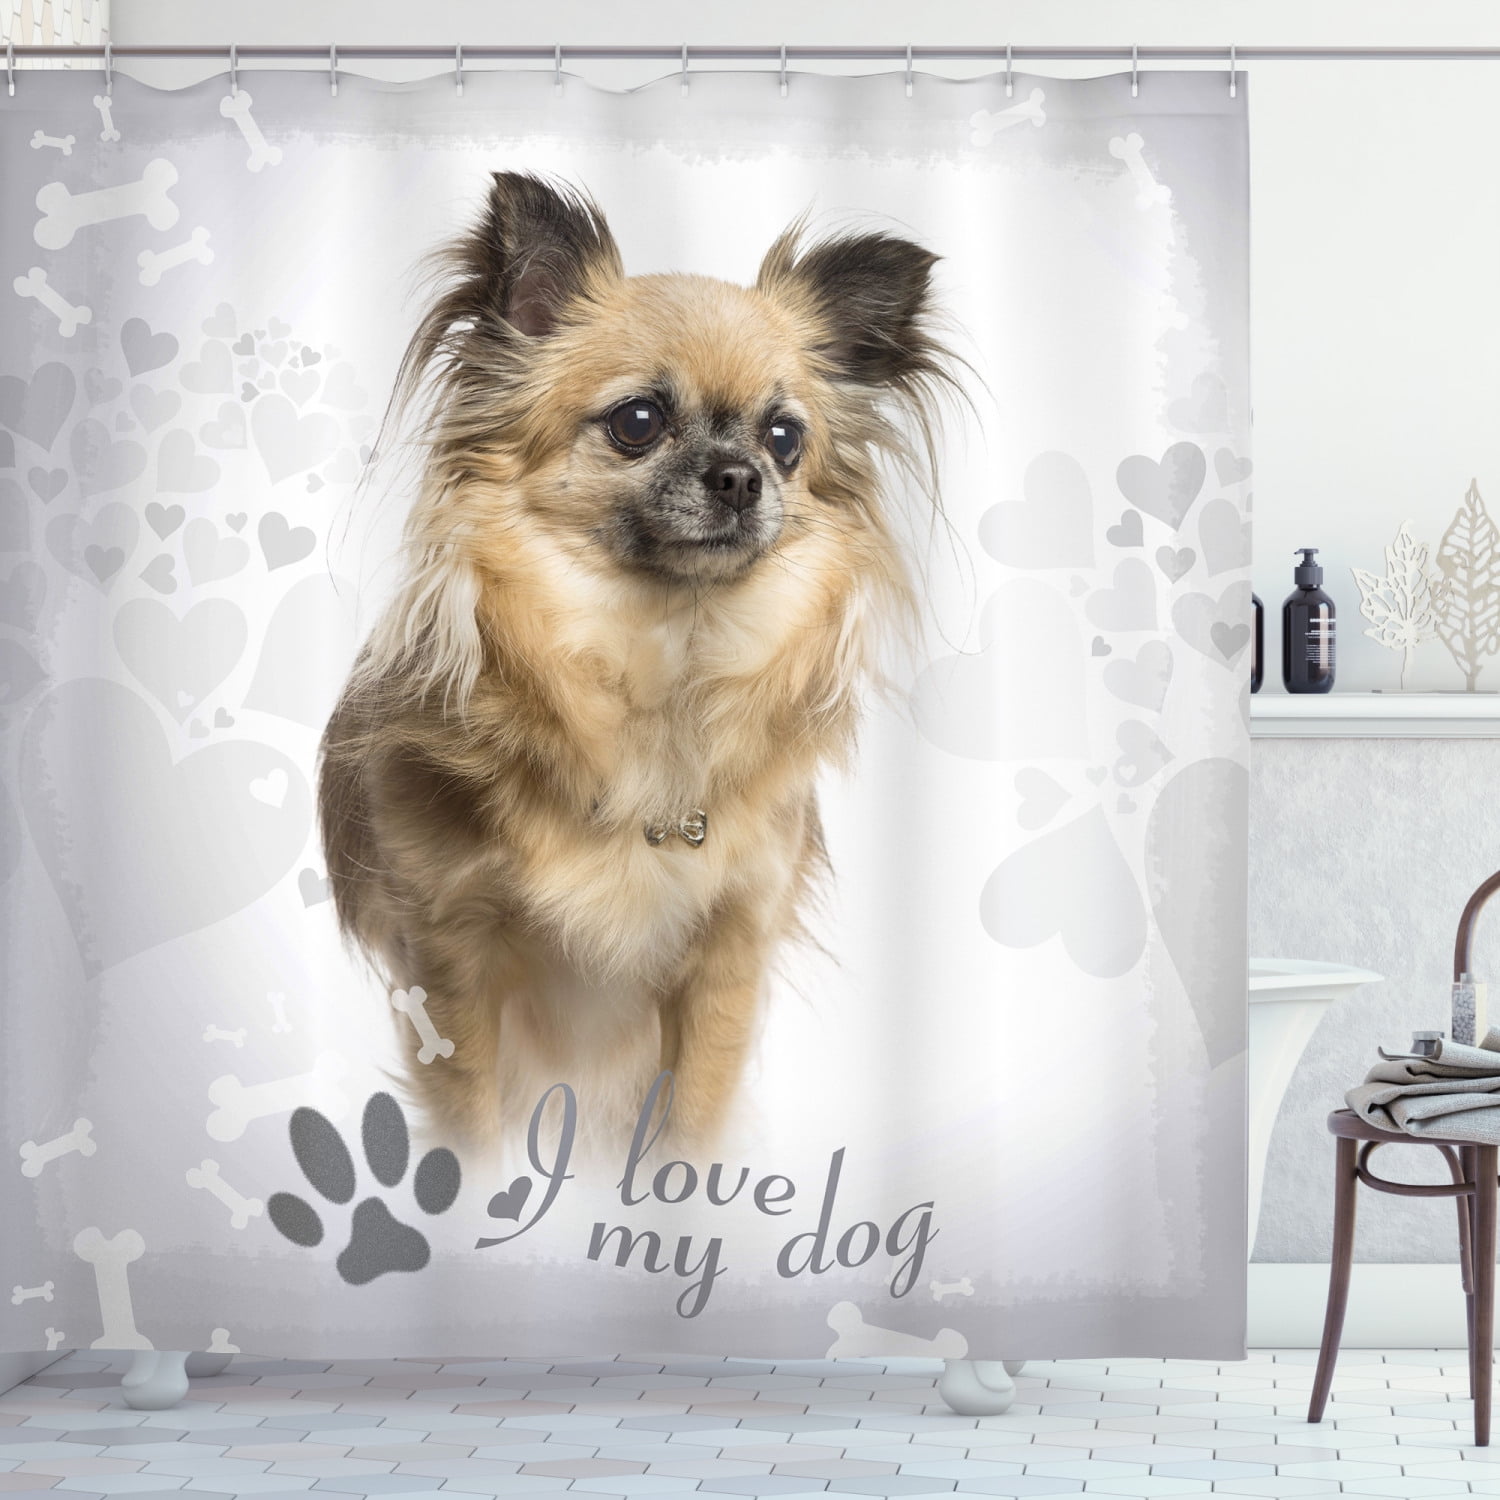 Color Pet Dog Paw Print Shower Curtain Waterproof Bathroom Fabric Liner 12 Hooks 